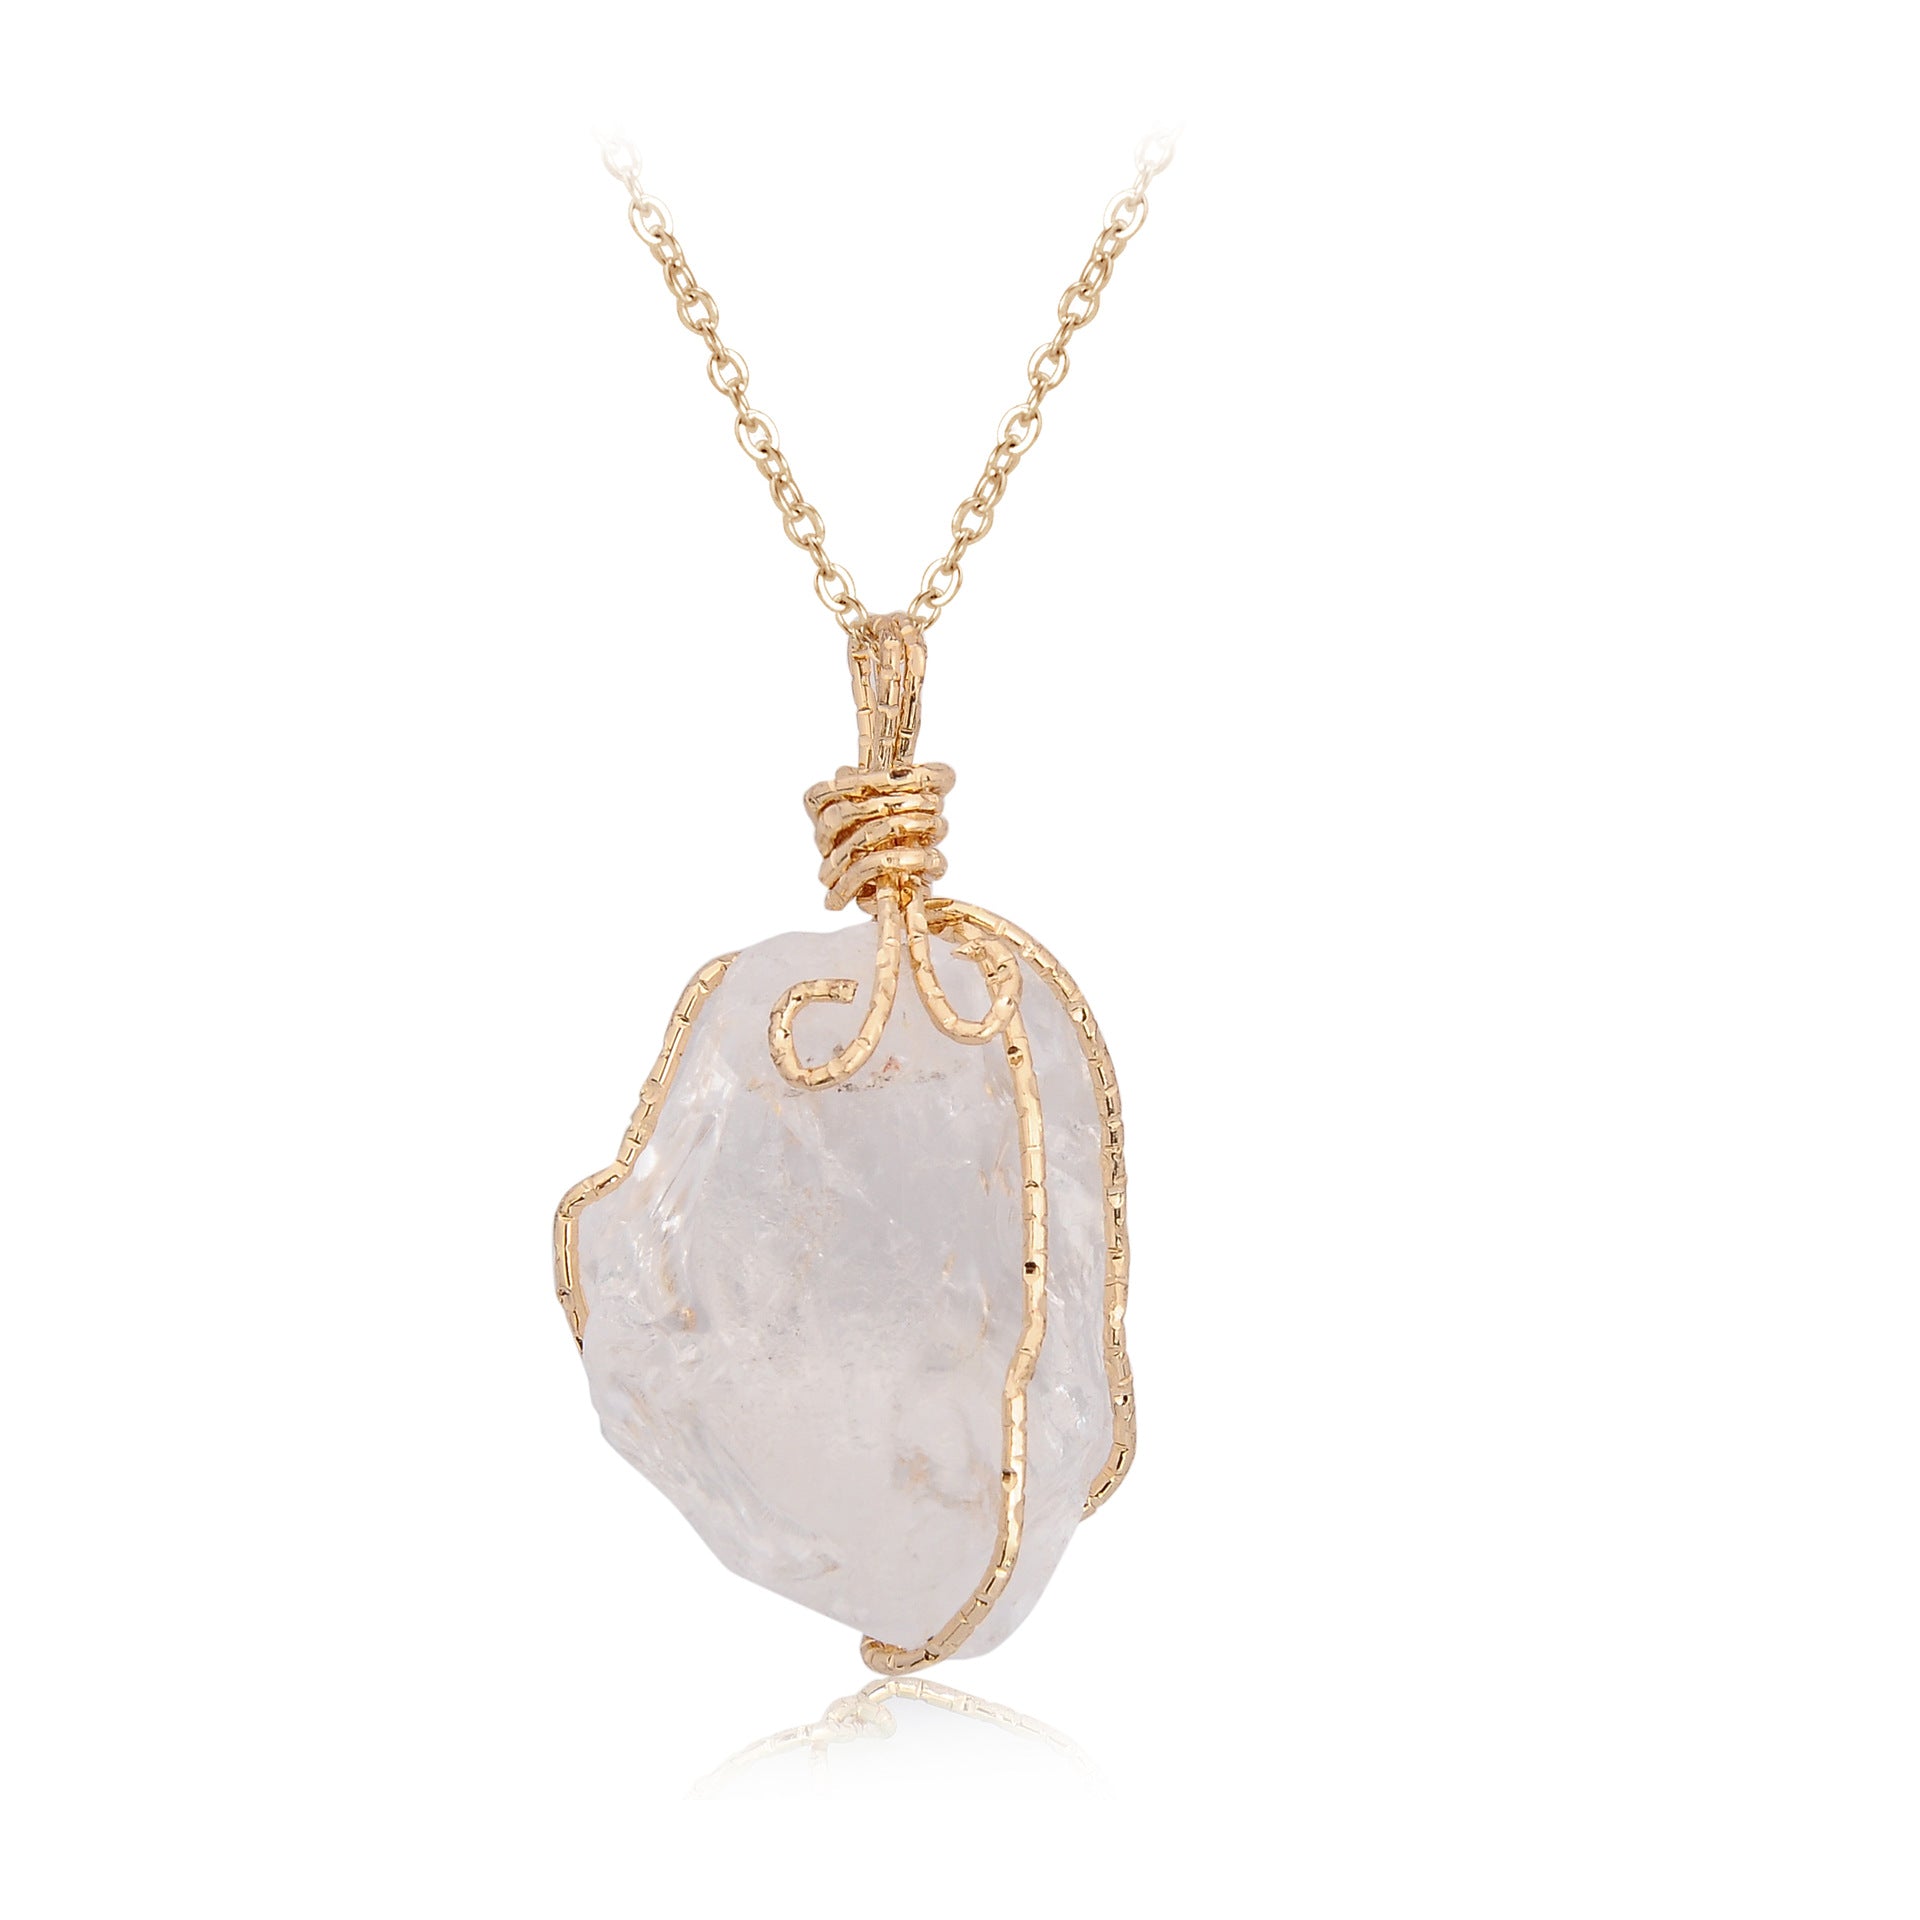 Natural stone pendant irregular crystal rough necklace